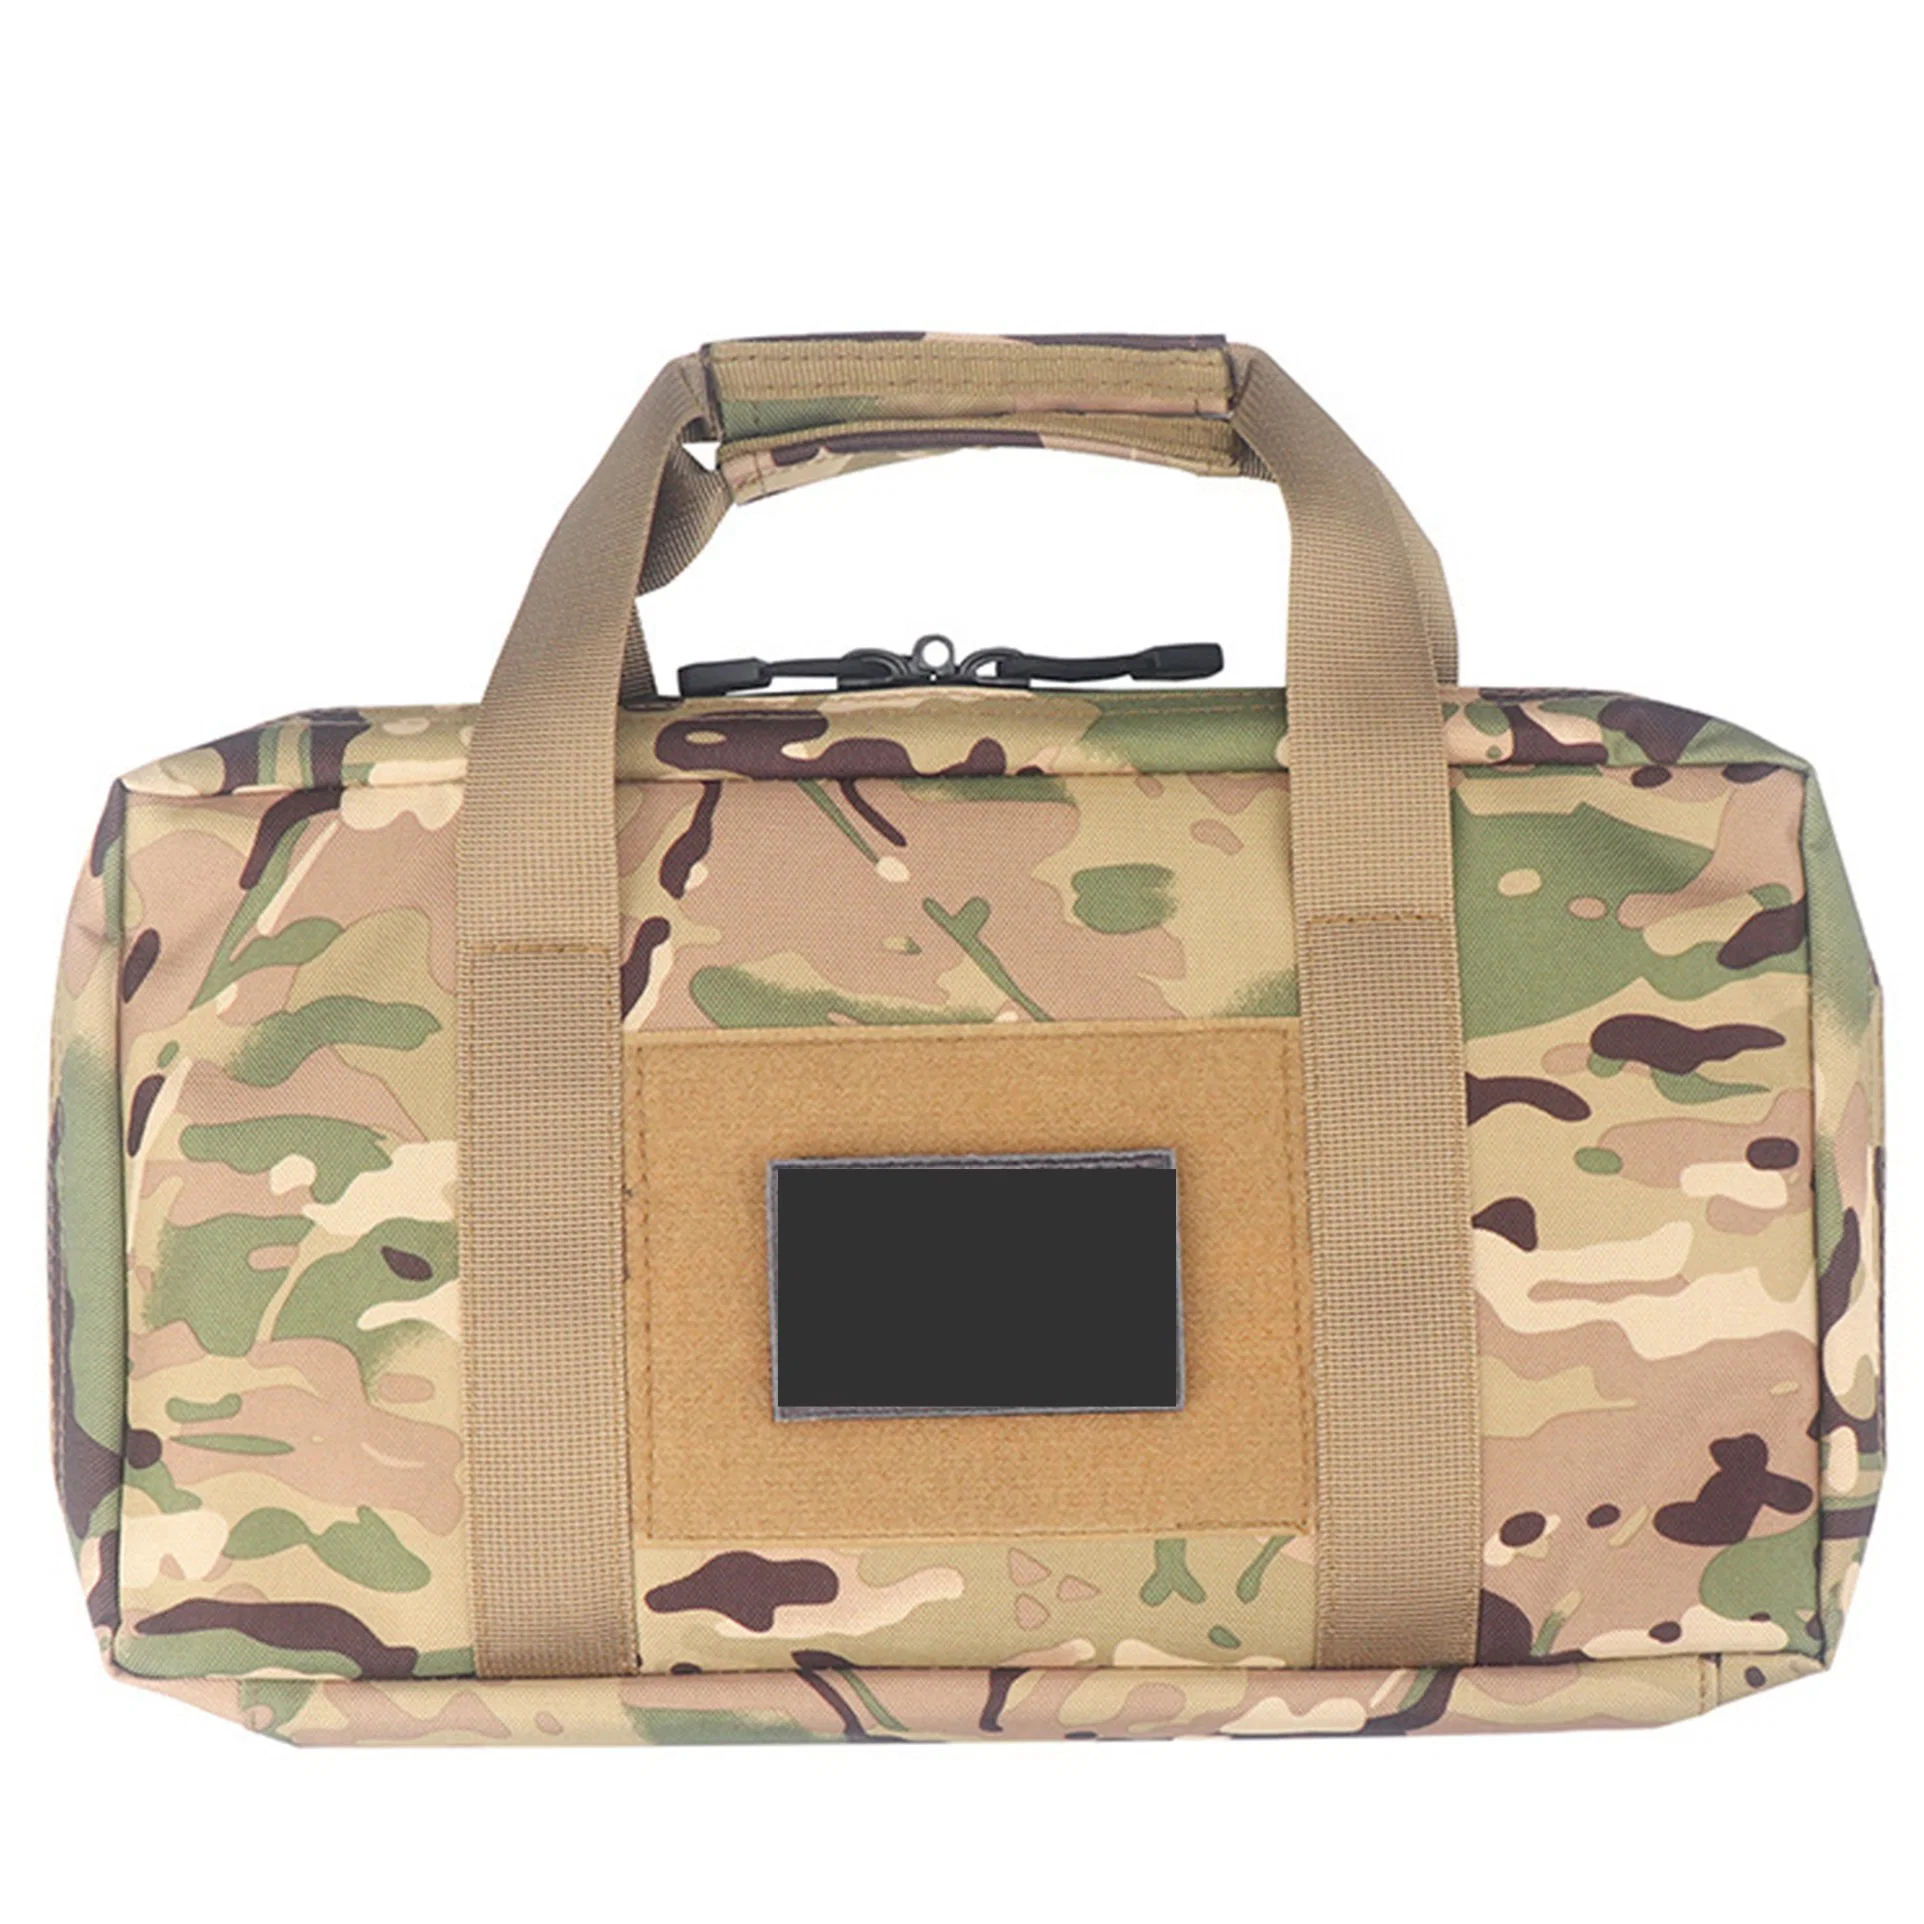 Hunting Shooting Magazine Carry Pouch Range Bag Travel Bag